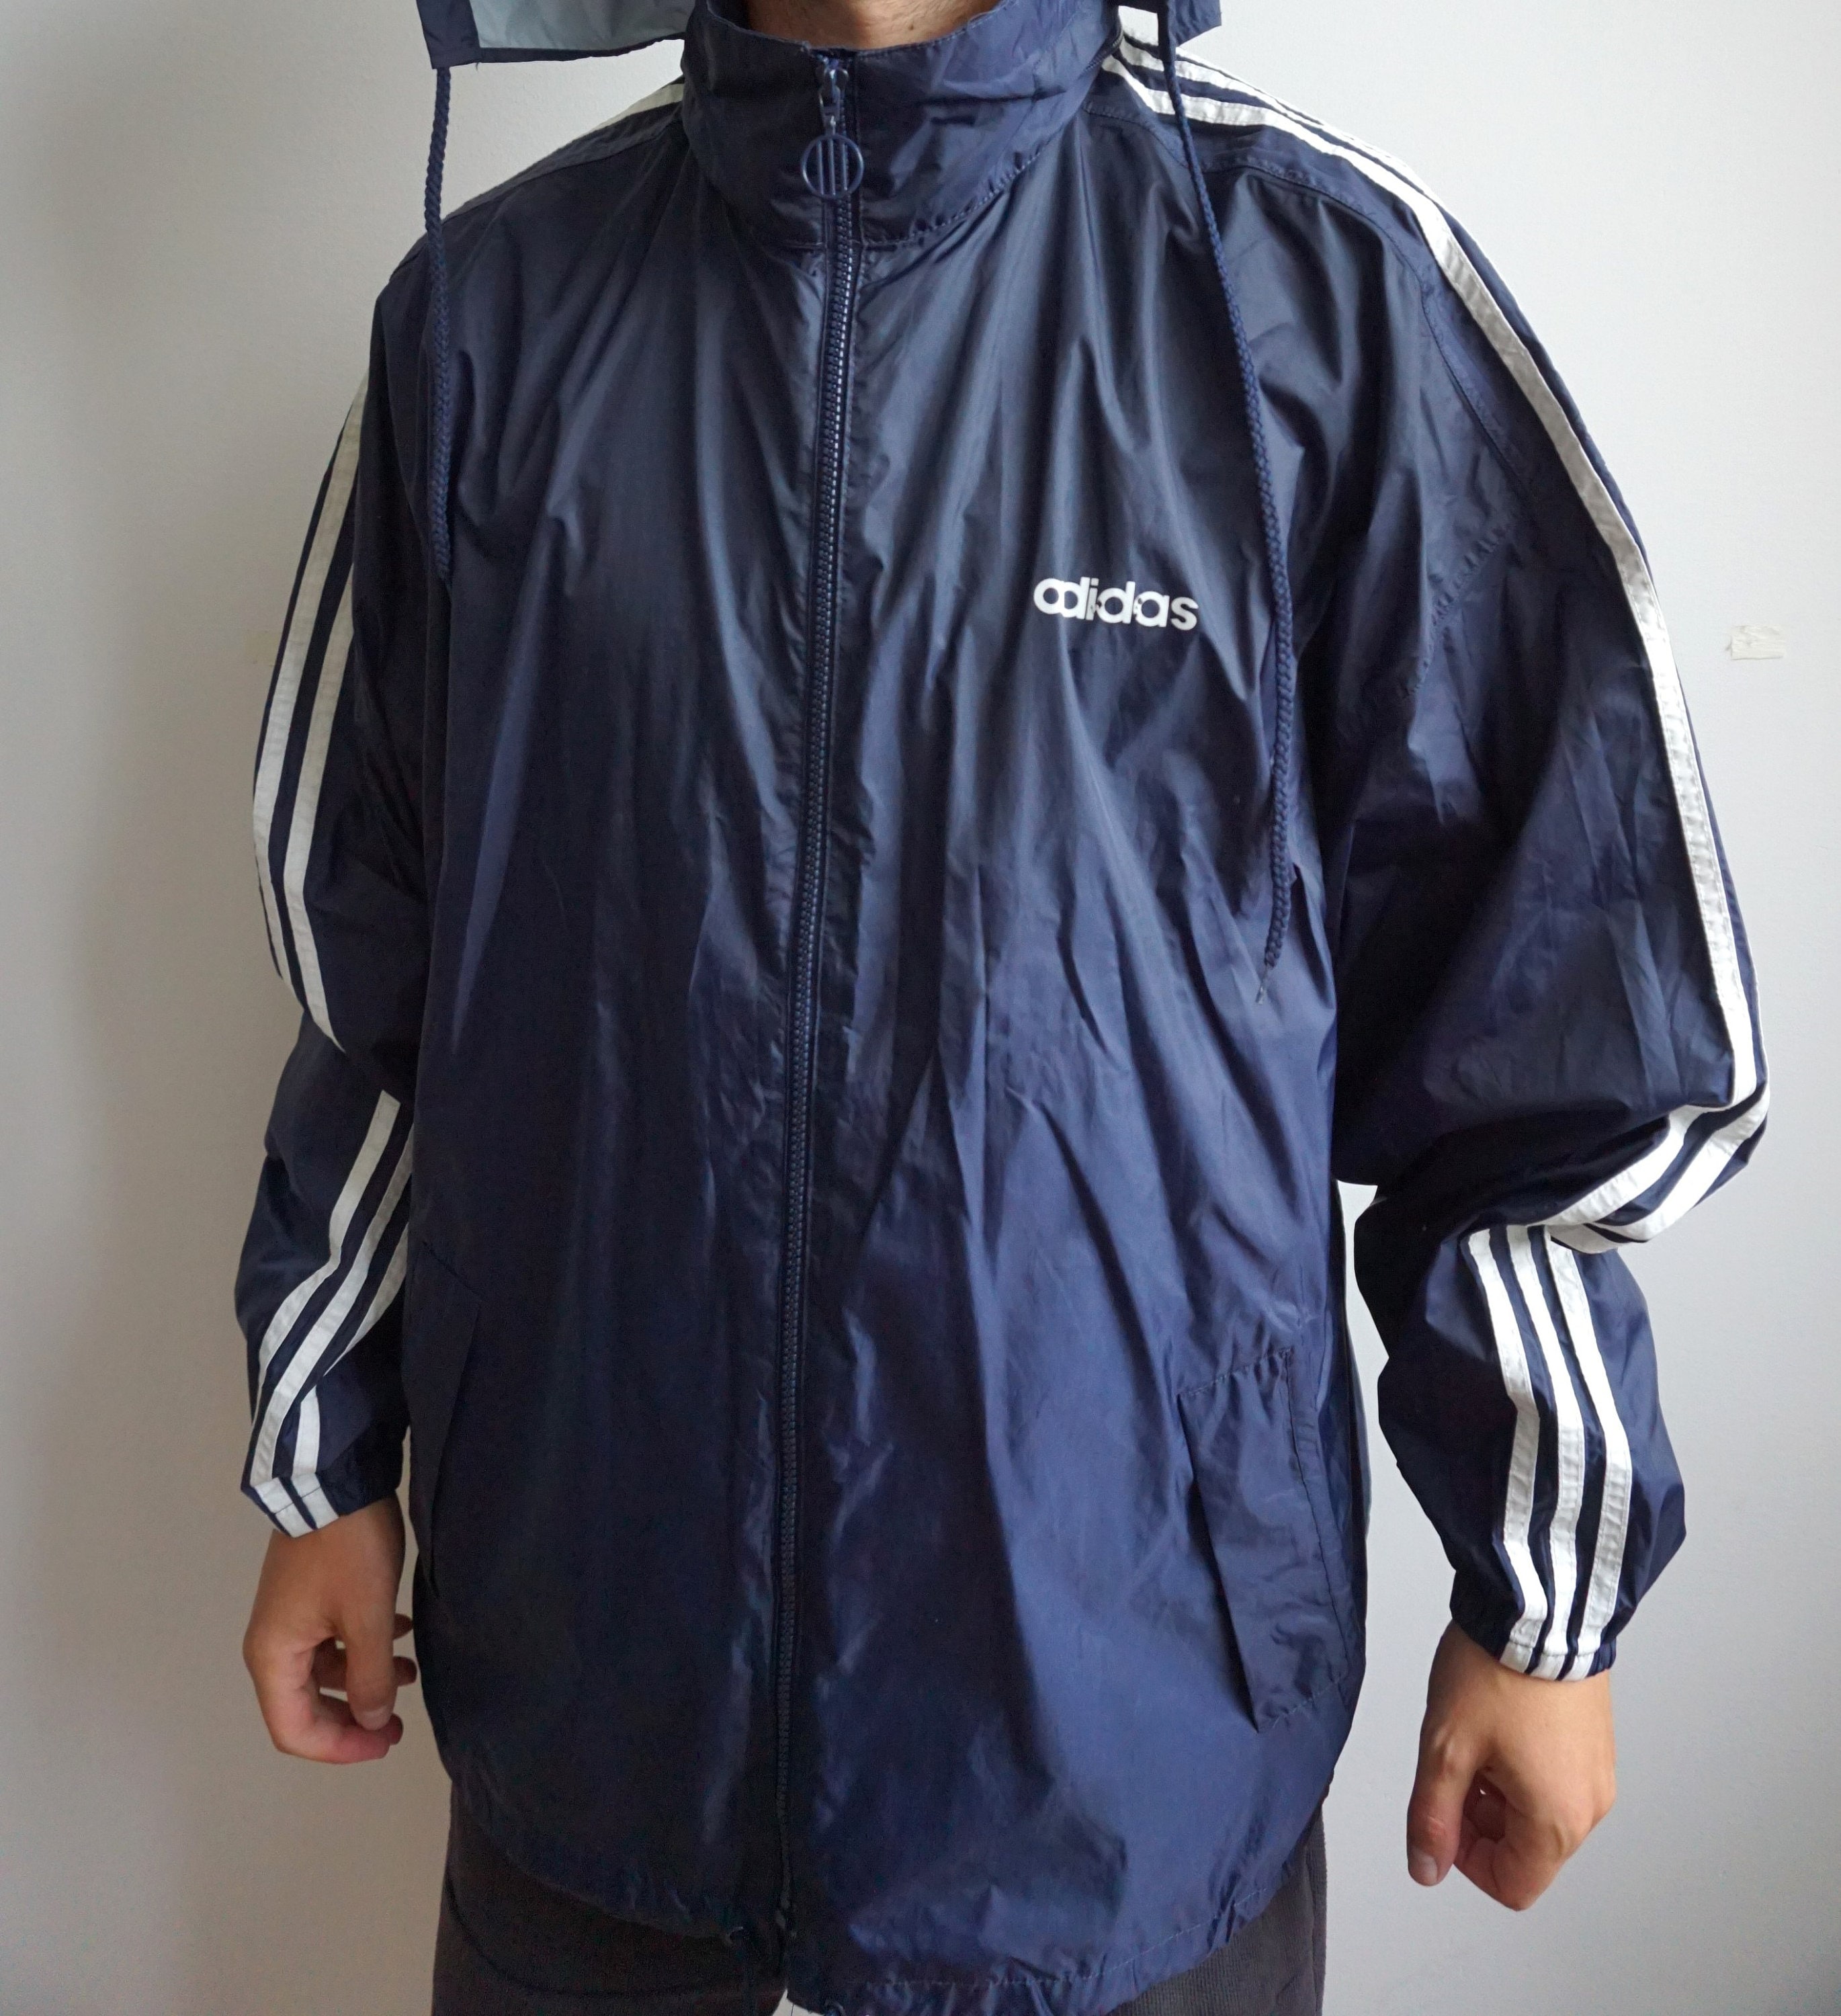 Buy Vintage ADIDAS Raincoat / Rain Coat / Windbreaker Outwear / Online in - Etsy